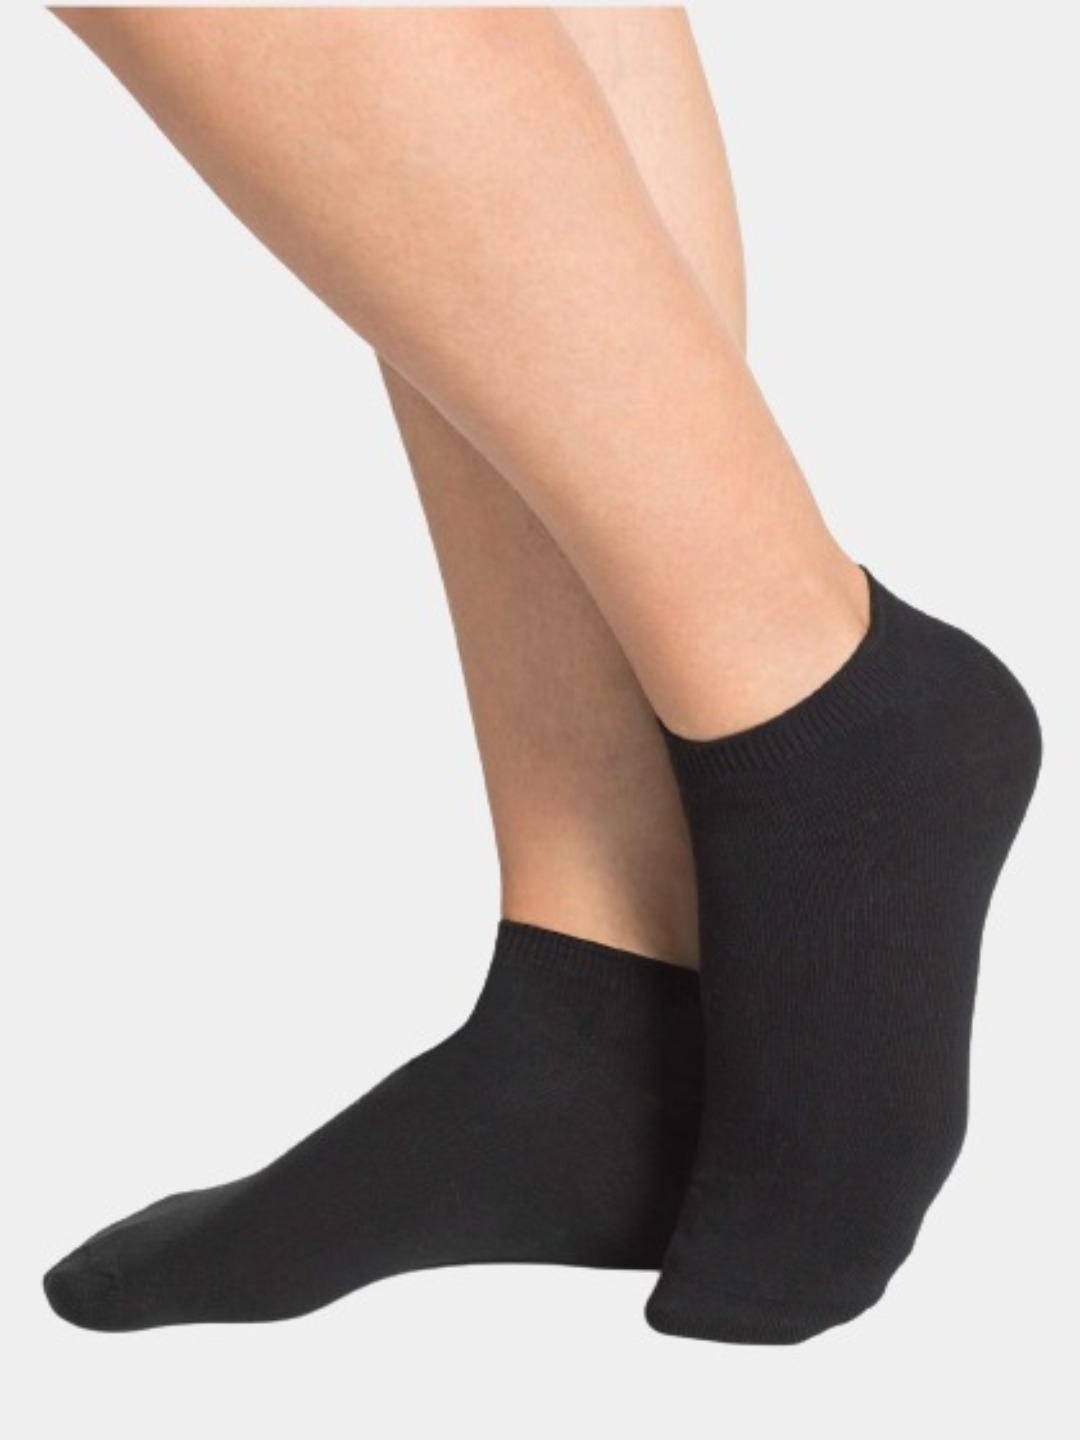 Короткие черные носки. Носки Туркан мужские черные 10 пар. Носки Livergy socquettes homme. Носки мужские Livergy укороченные. Носки черные короткие.